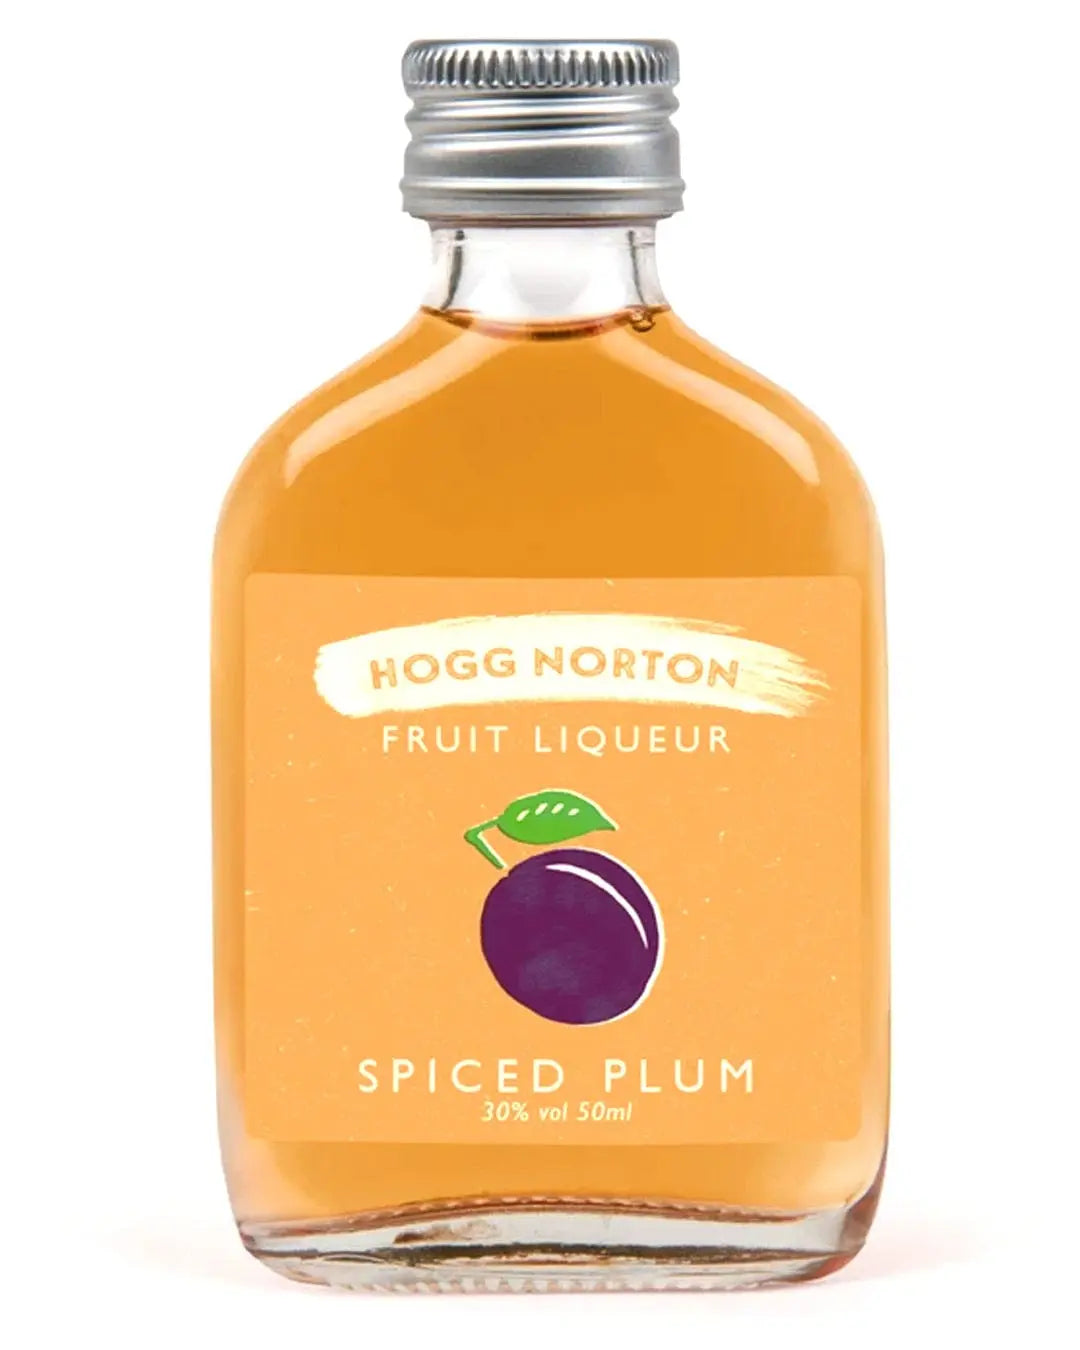 Hogg Norton Spiced Plum Fruit Liqueur, 5 cl Spirit Miniatures